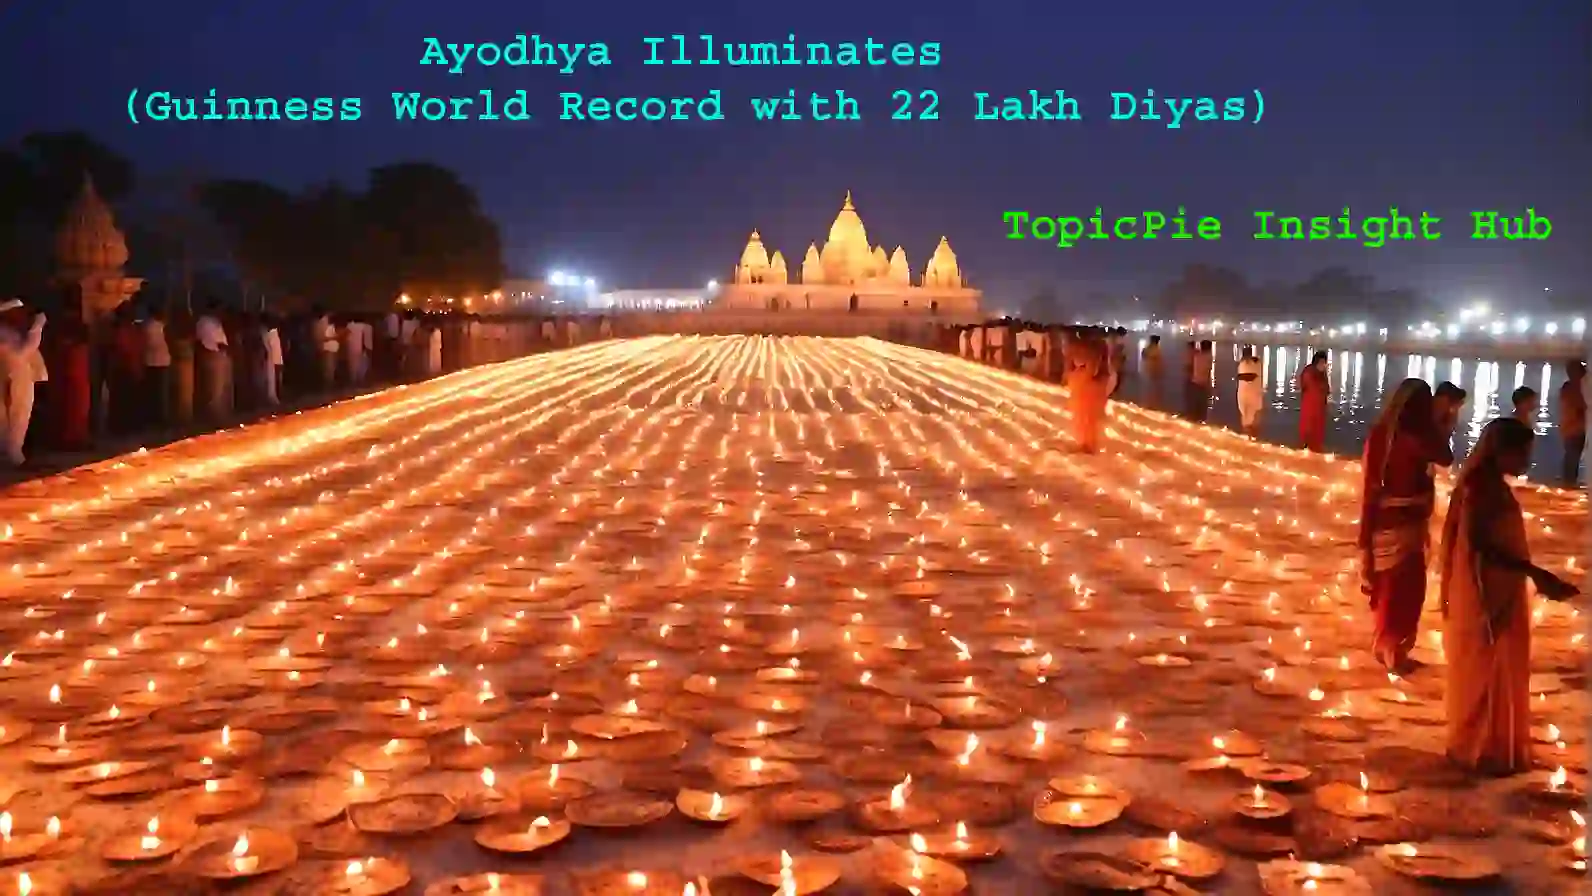 Ayodhya Illuminates (Guinness World Record with 22 Lakh Diyas)